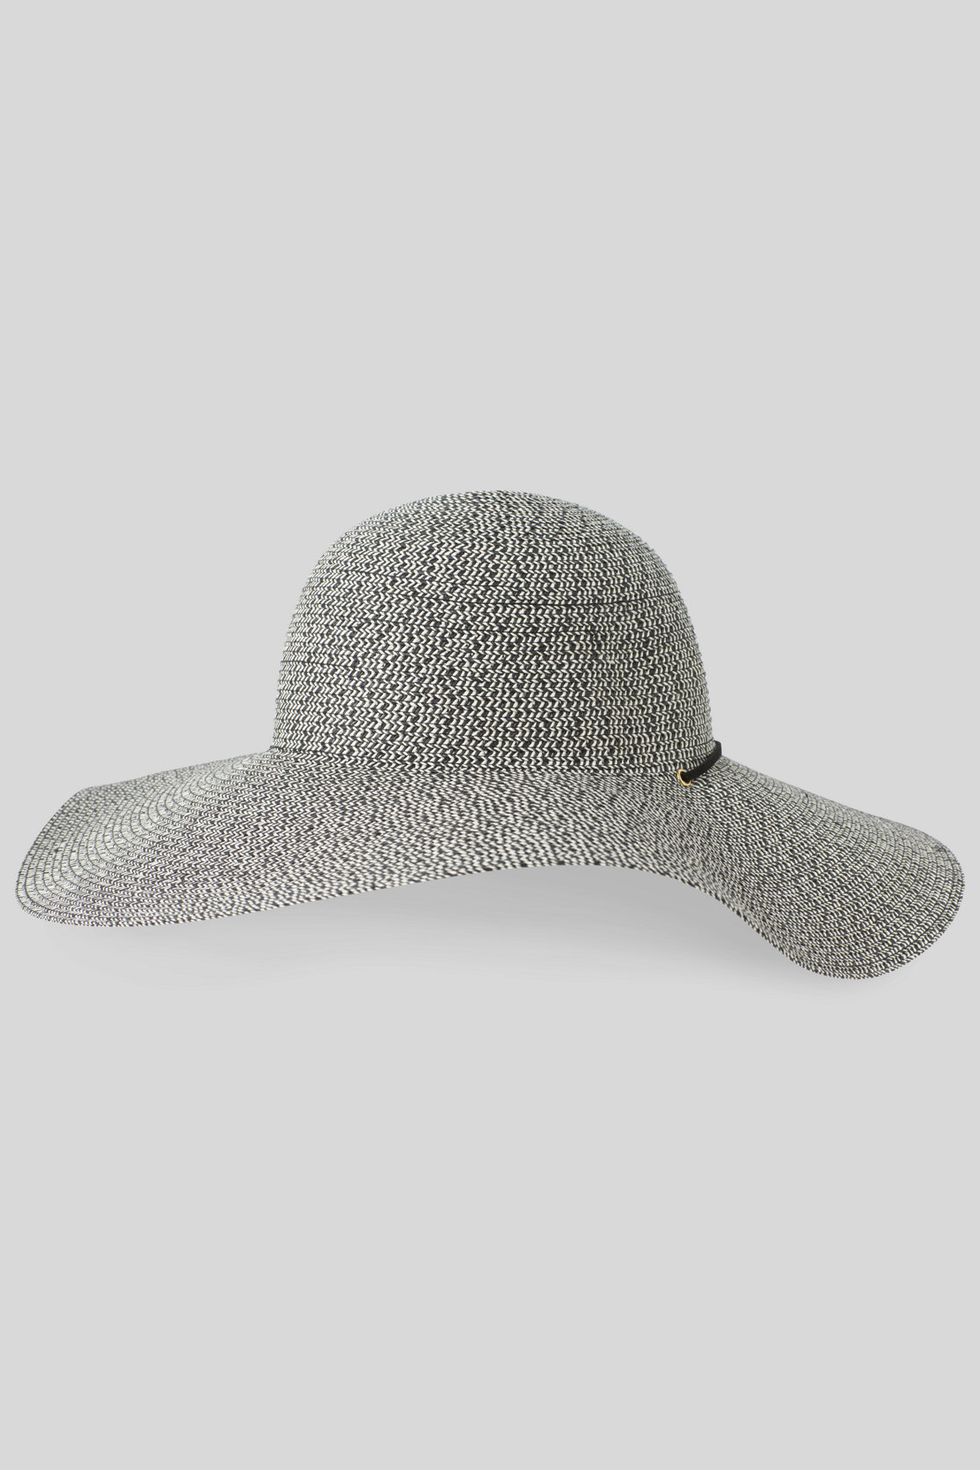 Fashion Oversized Straw Hat - Large Brim Sun Hat Beach Cap Big Foldable  Floppy Sunshade Hats for Women Girls Travel (Multicolor)